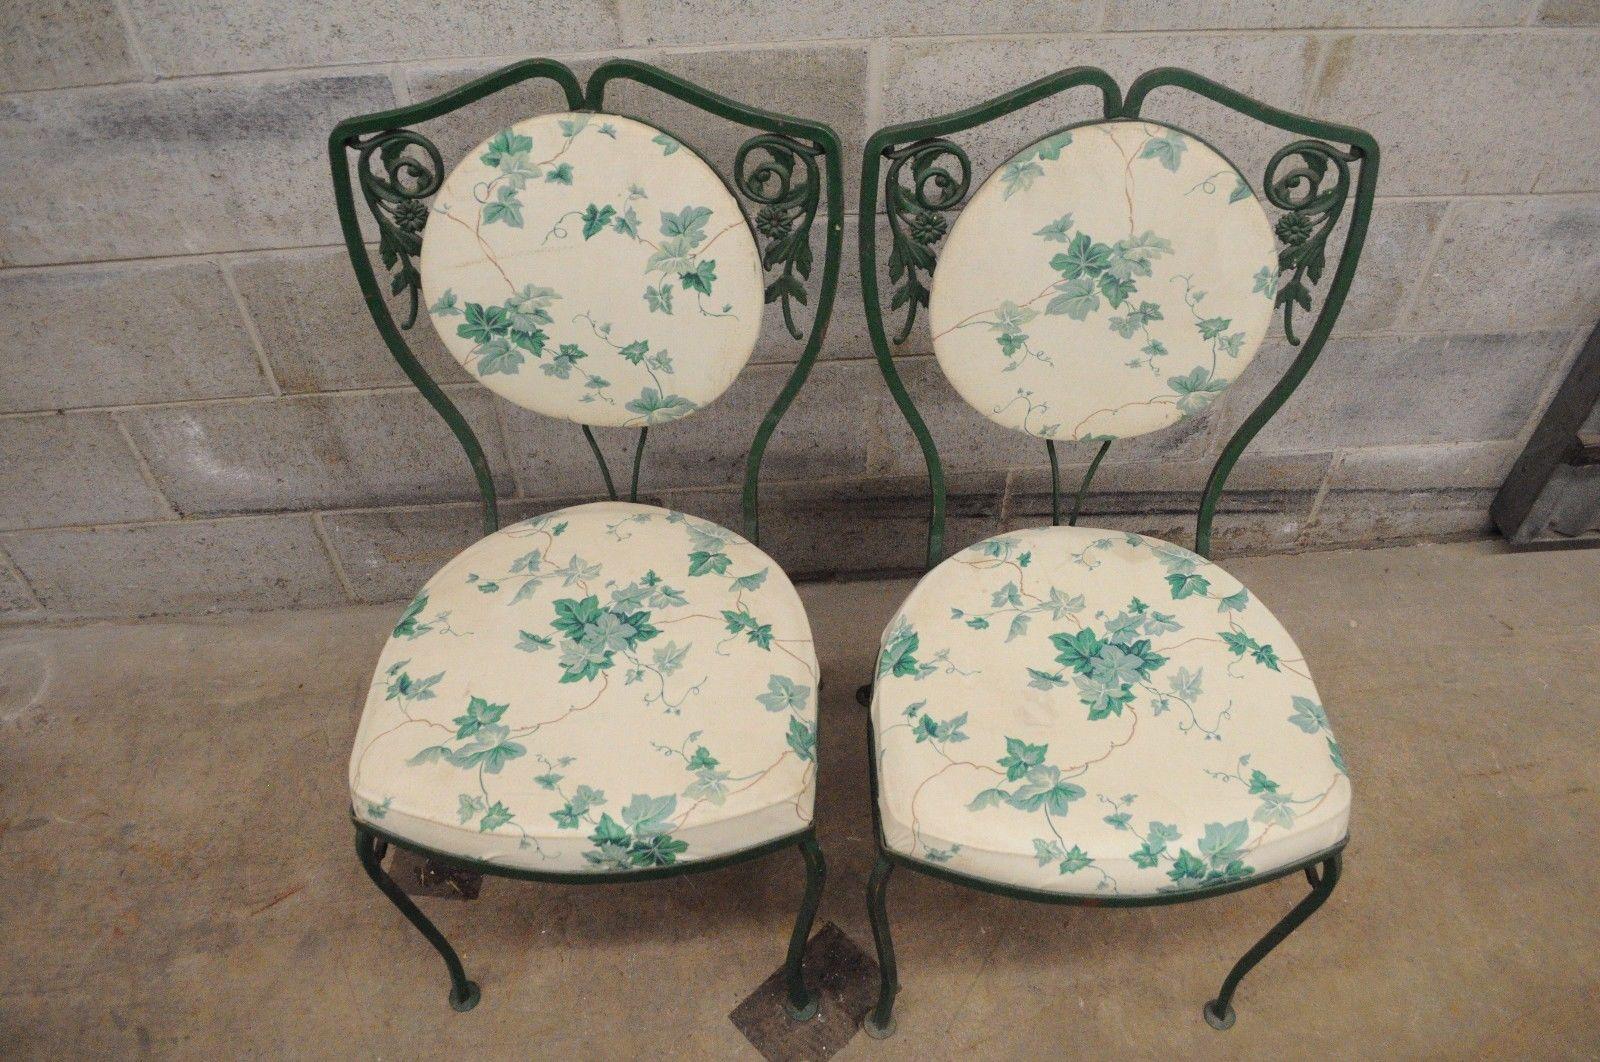 20th Century Salterini Wrought Iron Patio Dining Set Table Four Chairs Garden Furniture